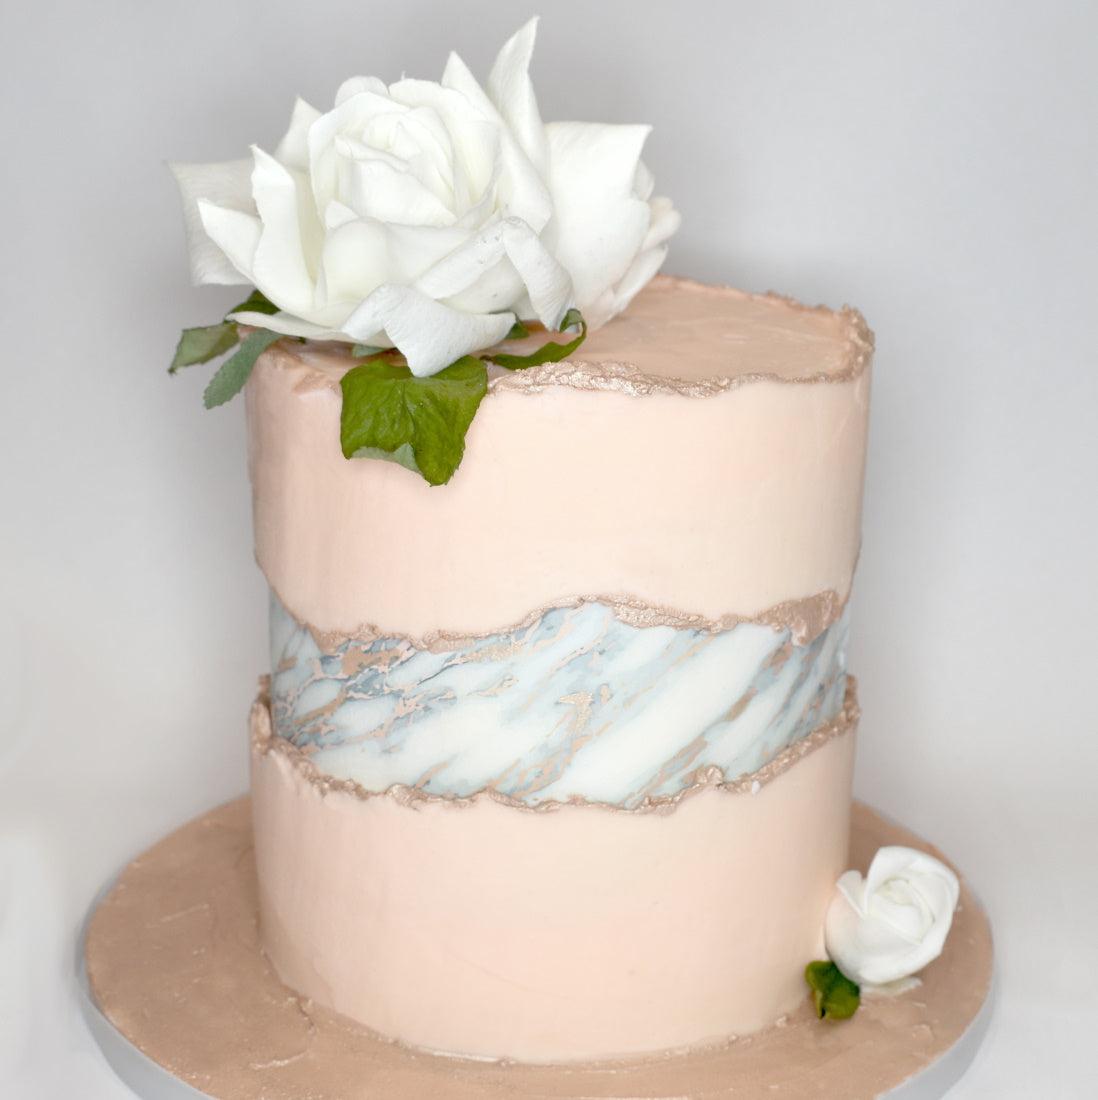 Cake decorating masterclass – Sarah's Cake Company